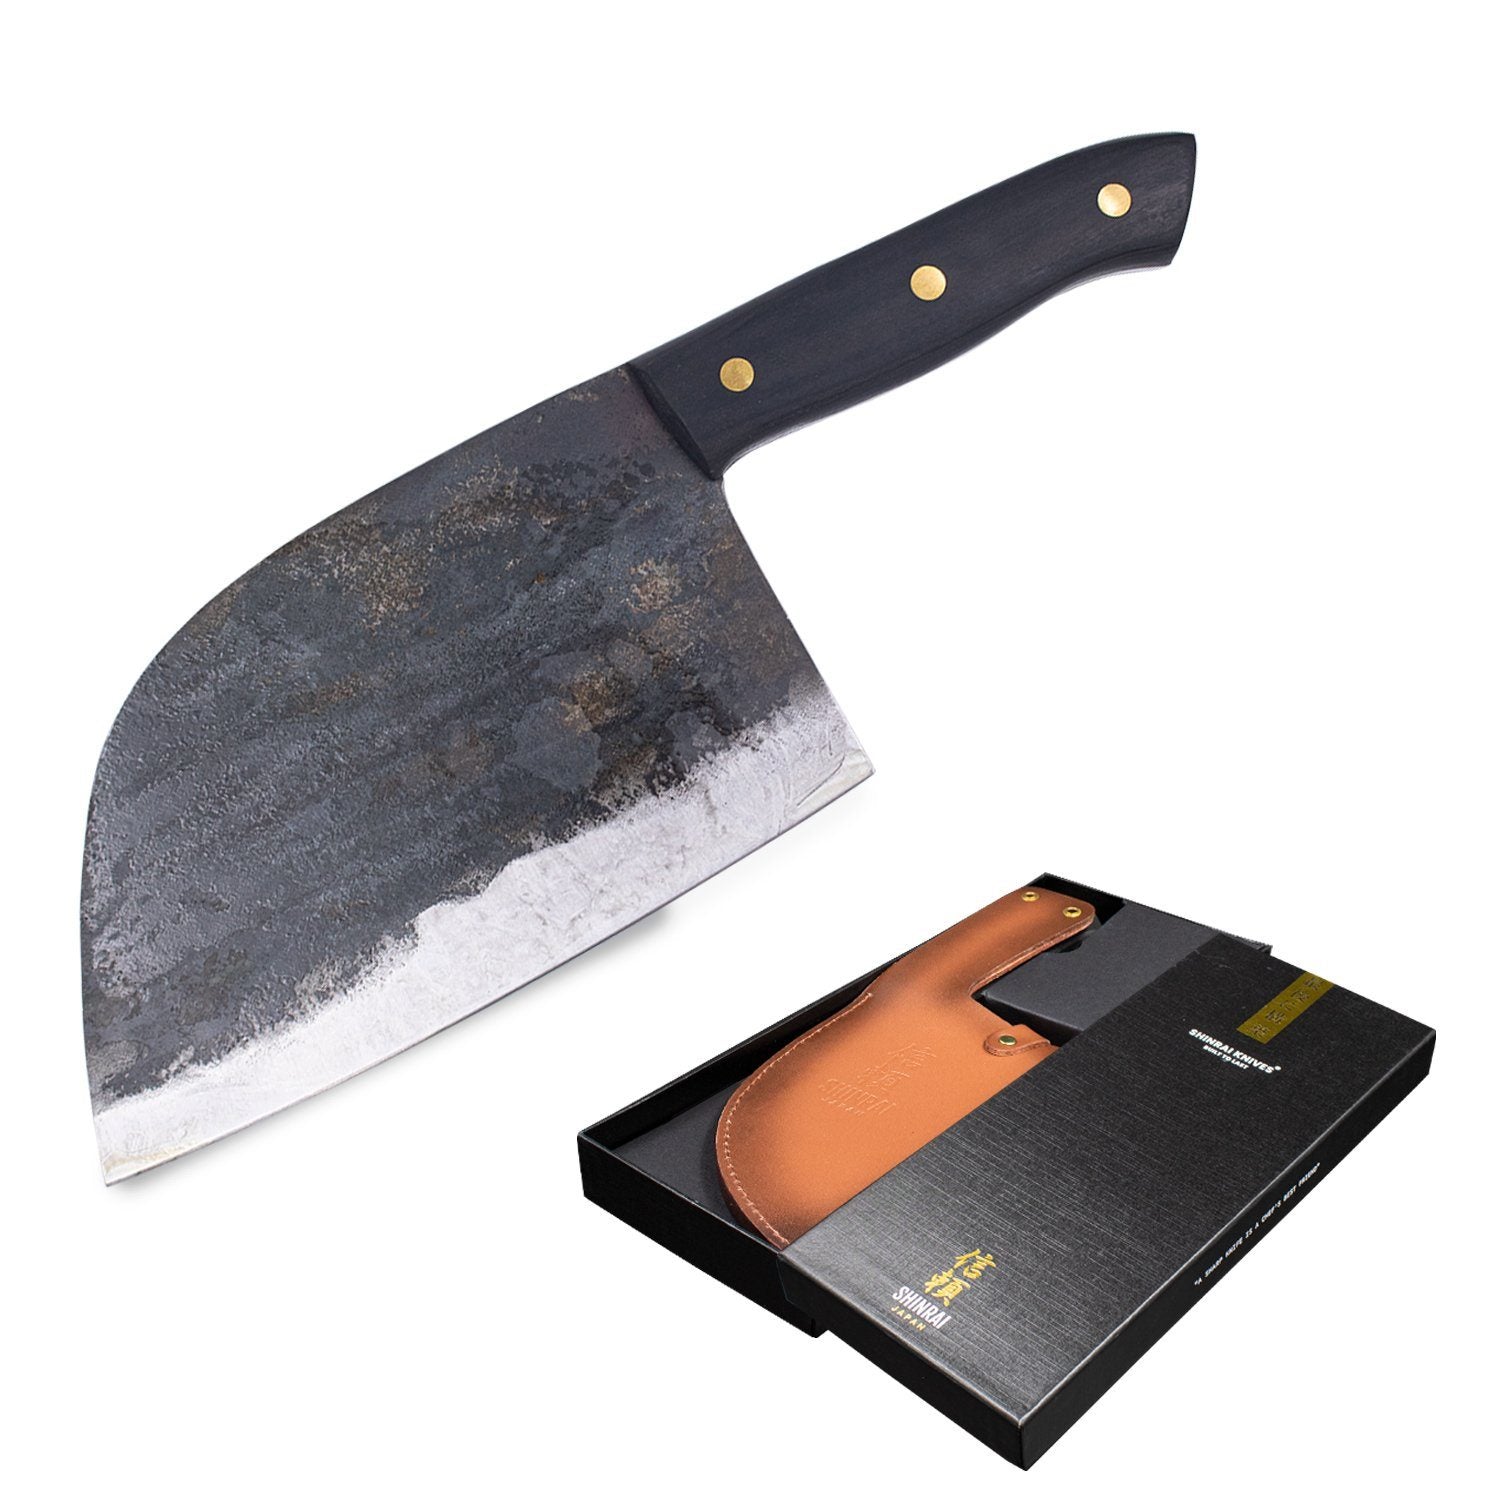 Shinrai Japan - 4-in-1 Knife Sharpener – KookGigant